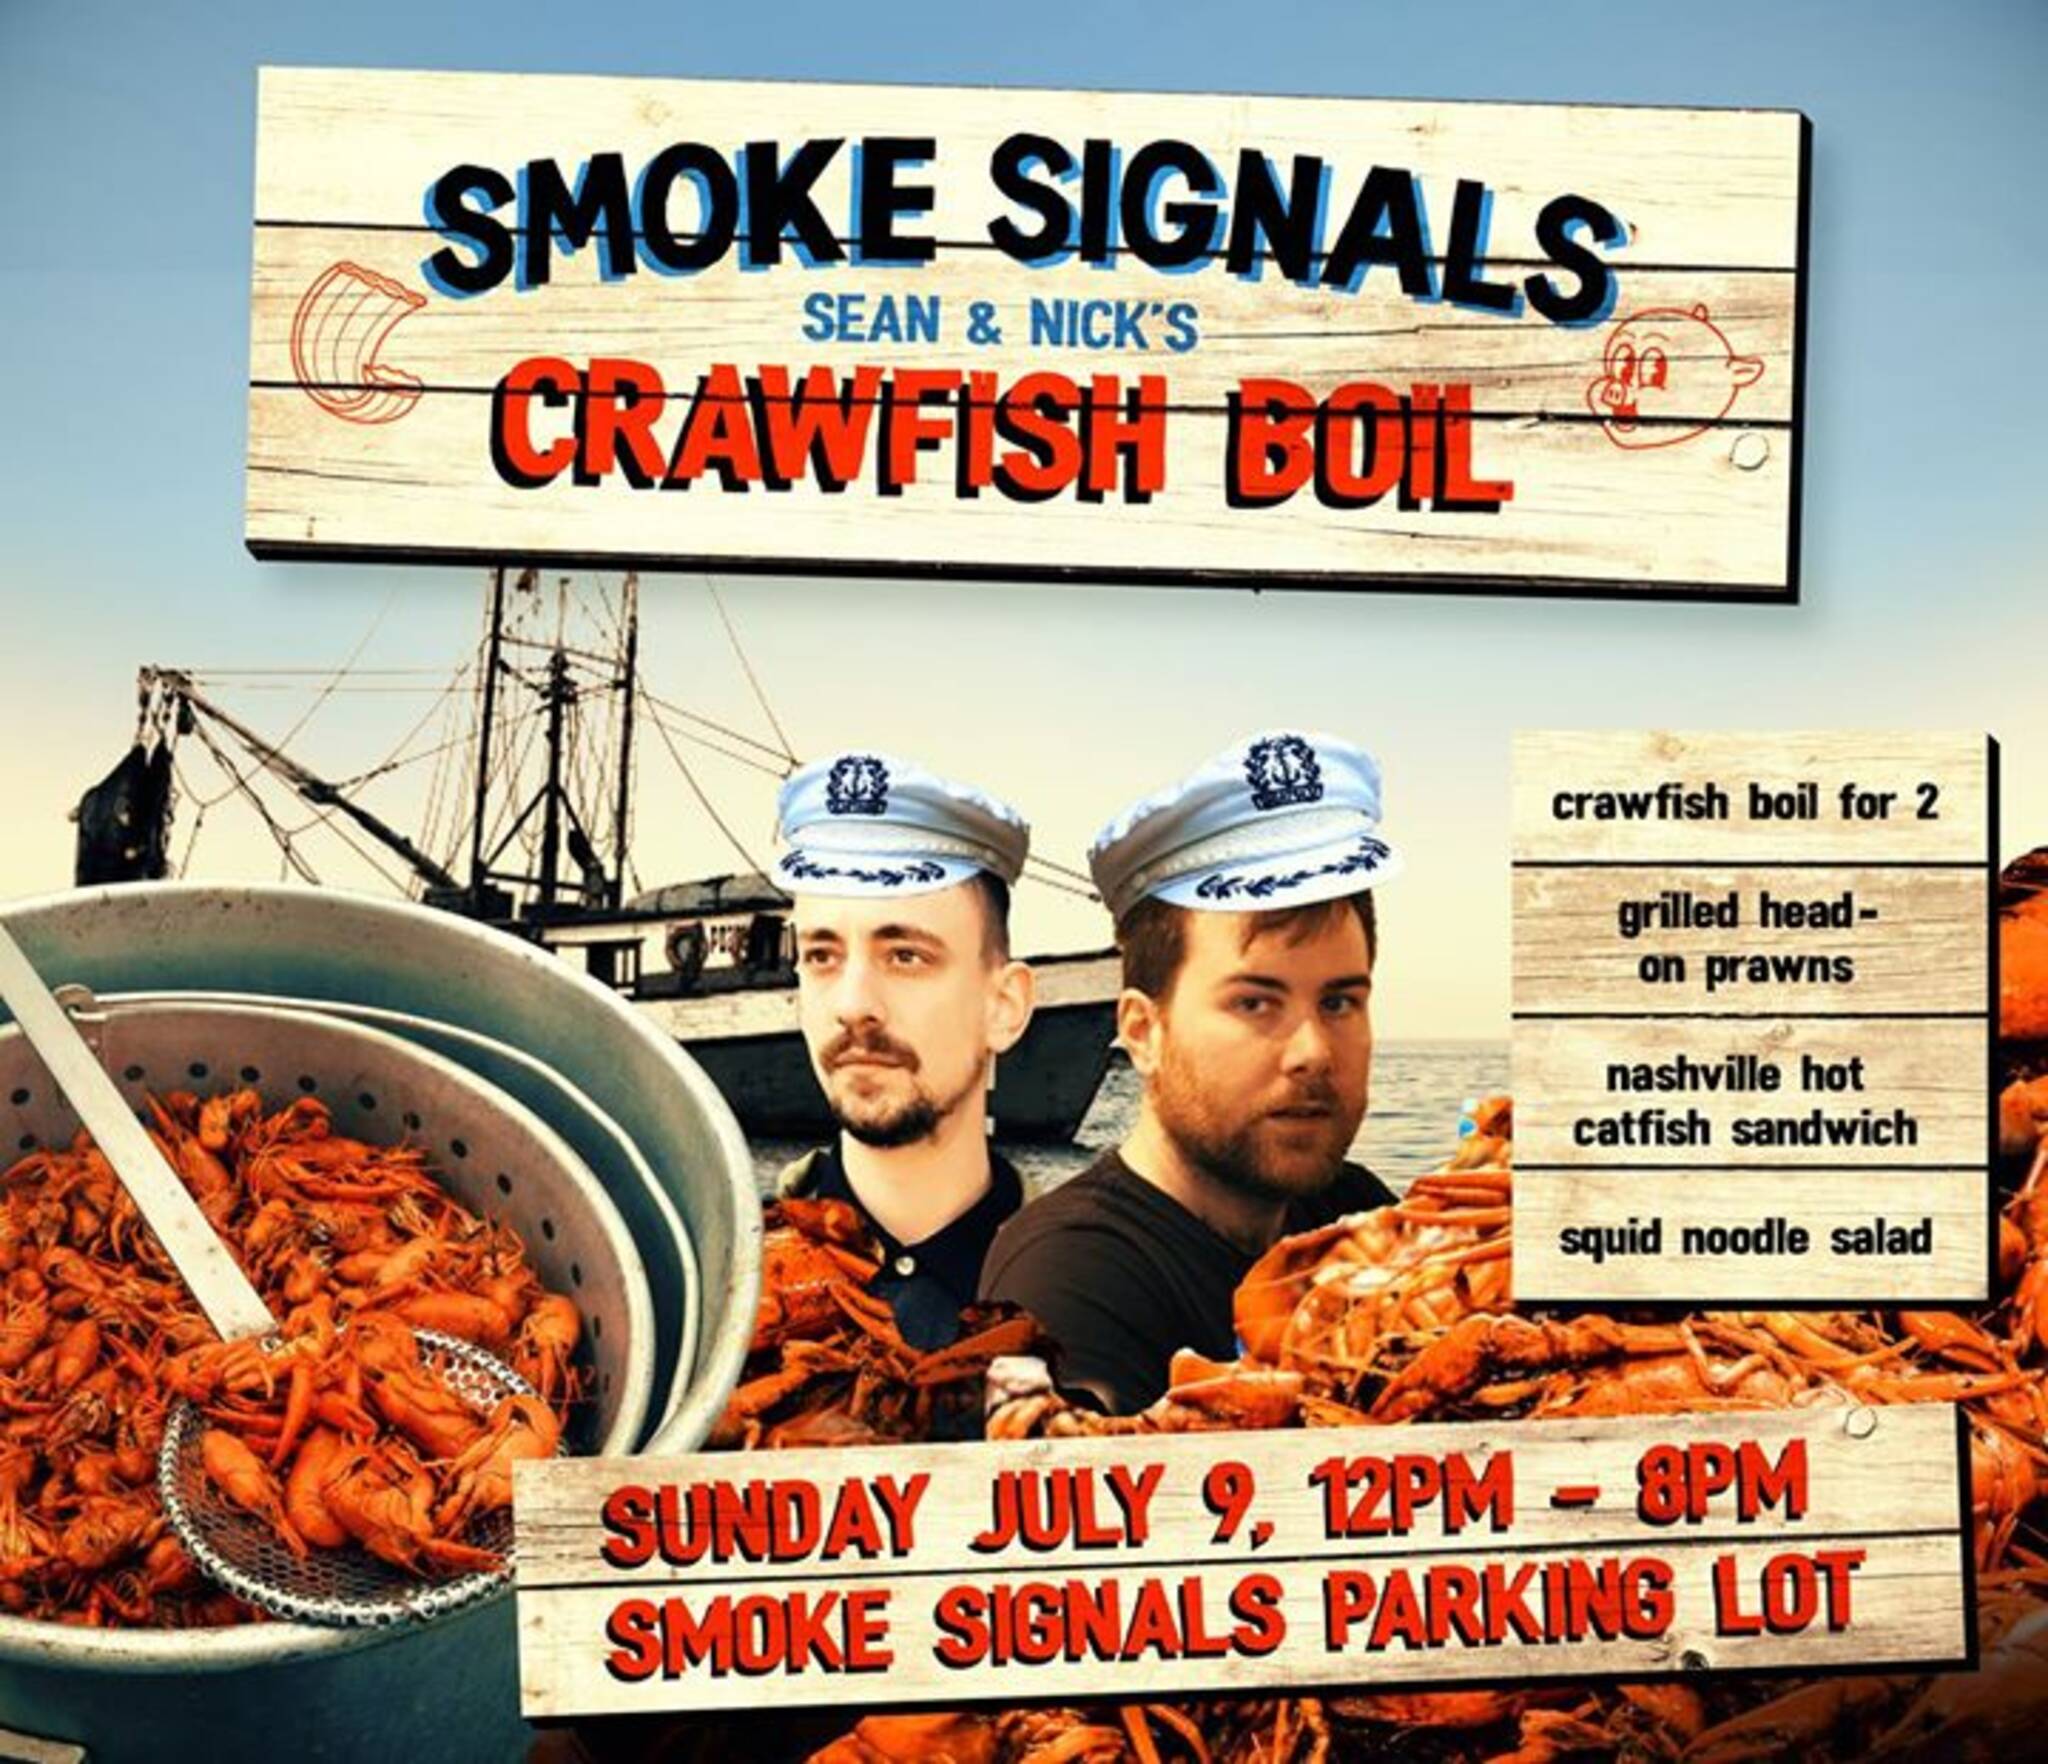 Sean & Nick's Crawfish Boil